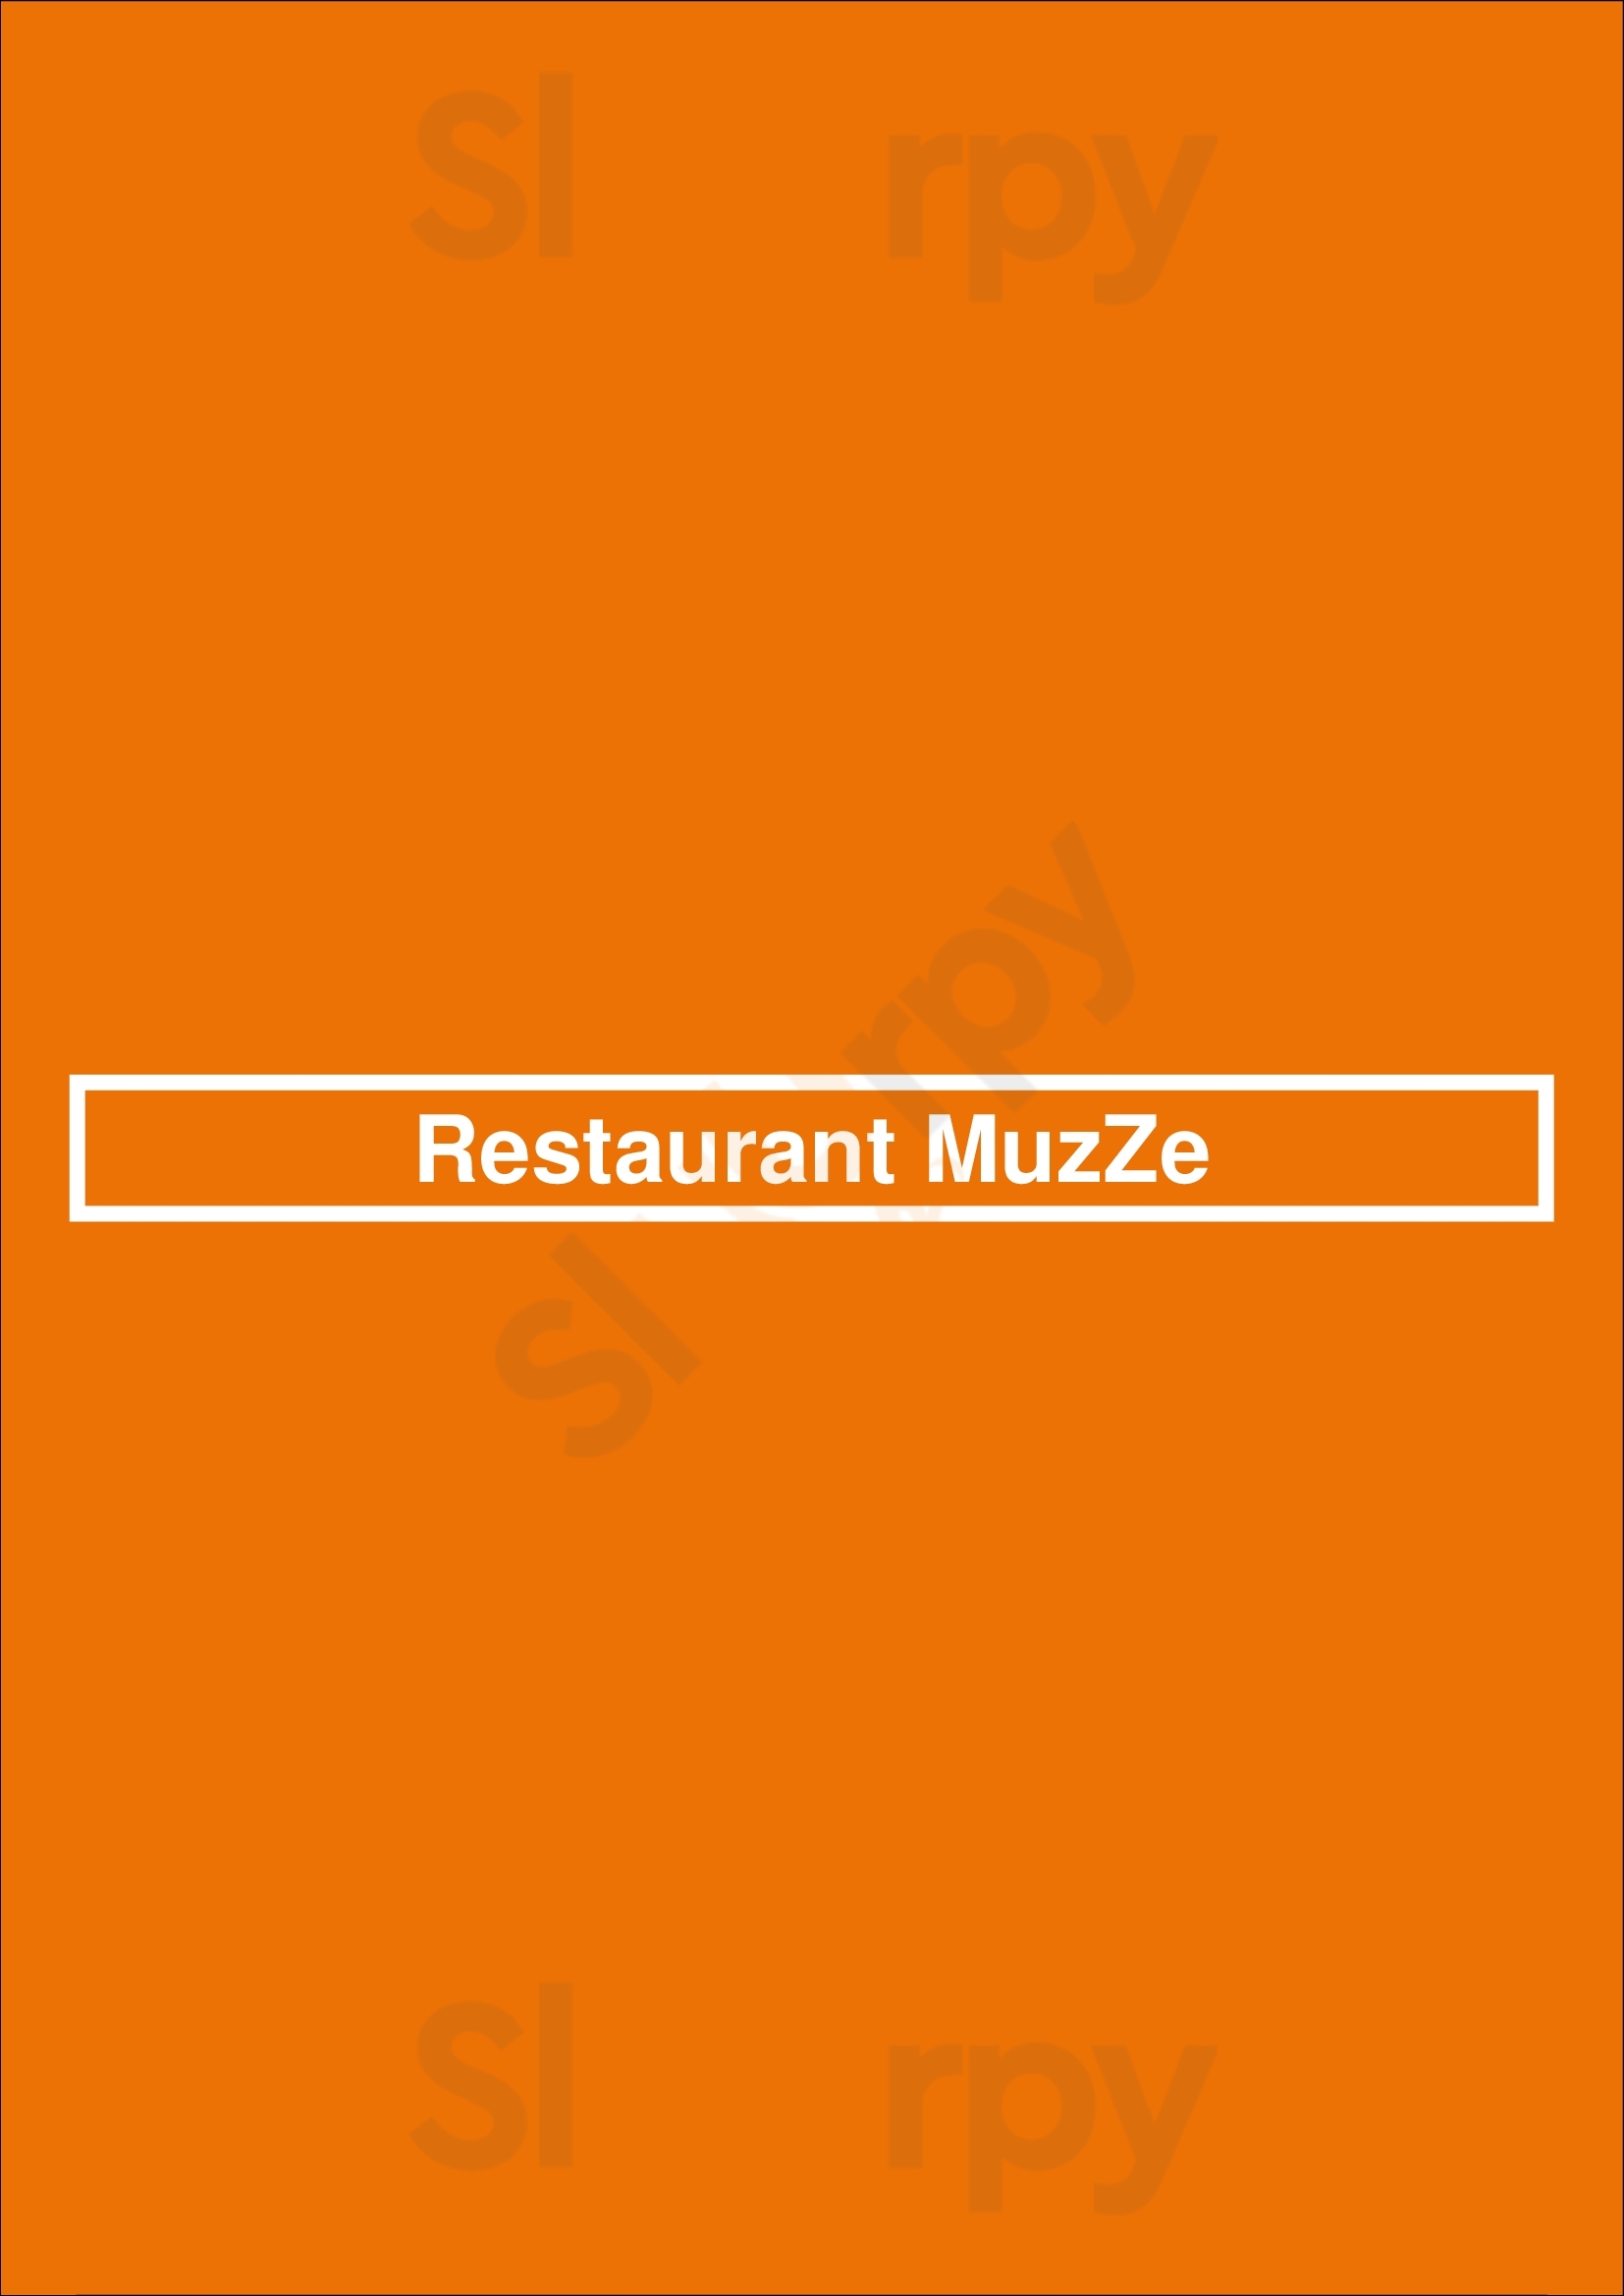 Restaurant Muzze Vlaardingen Menu - 1